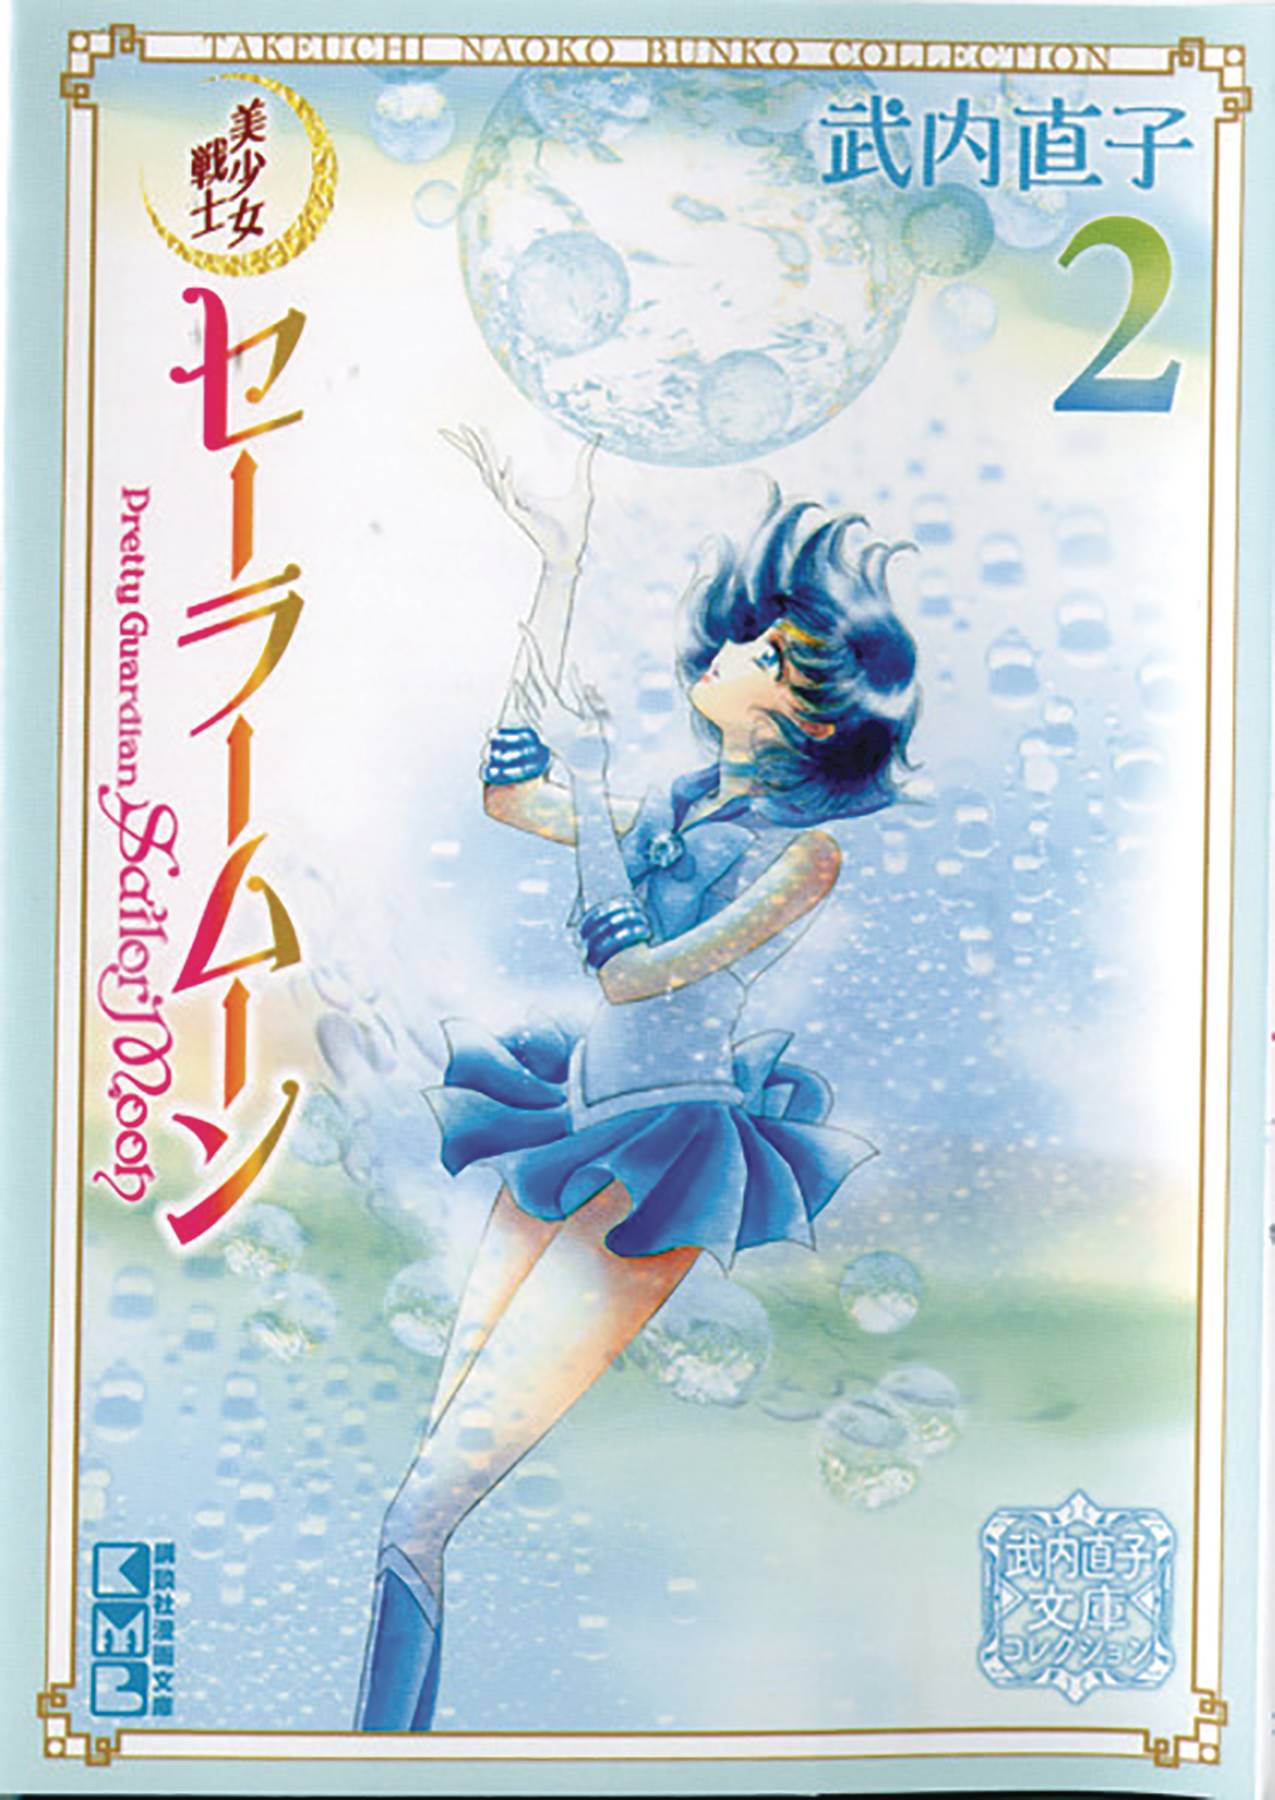 Sailor Moon Naoko Takeuchi Collection Vol. 02